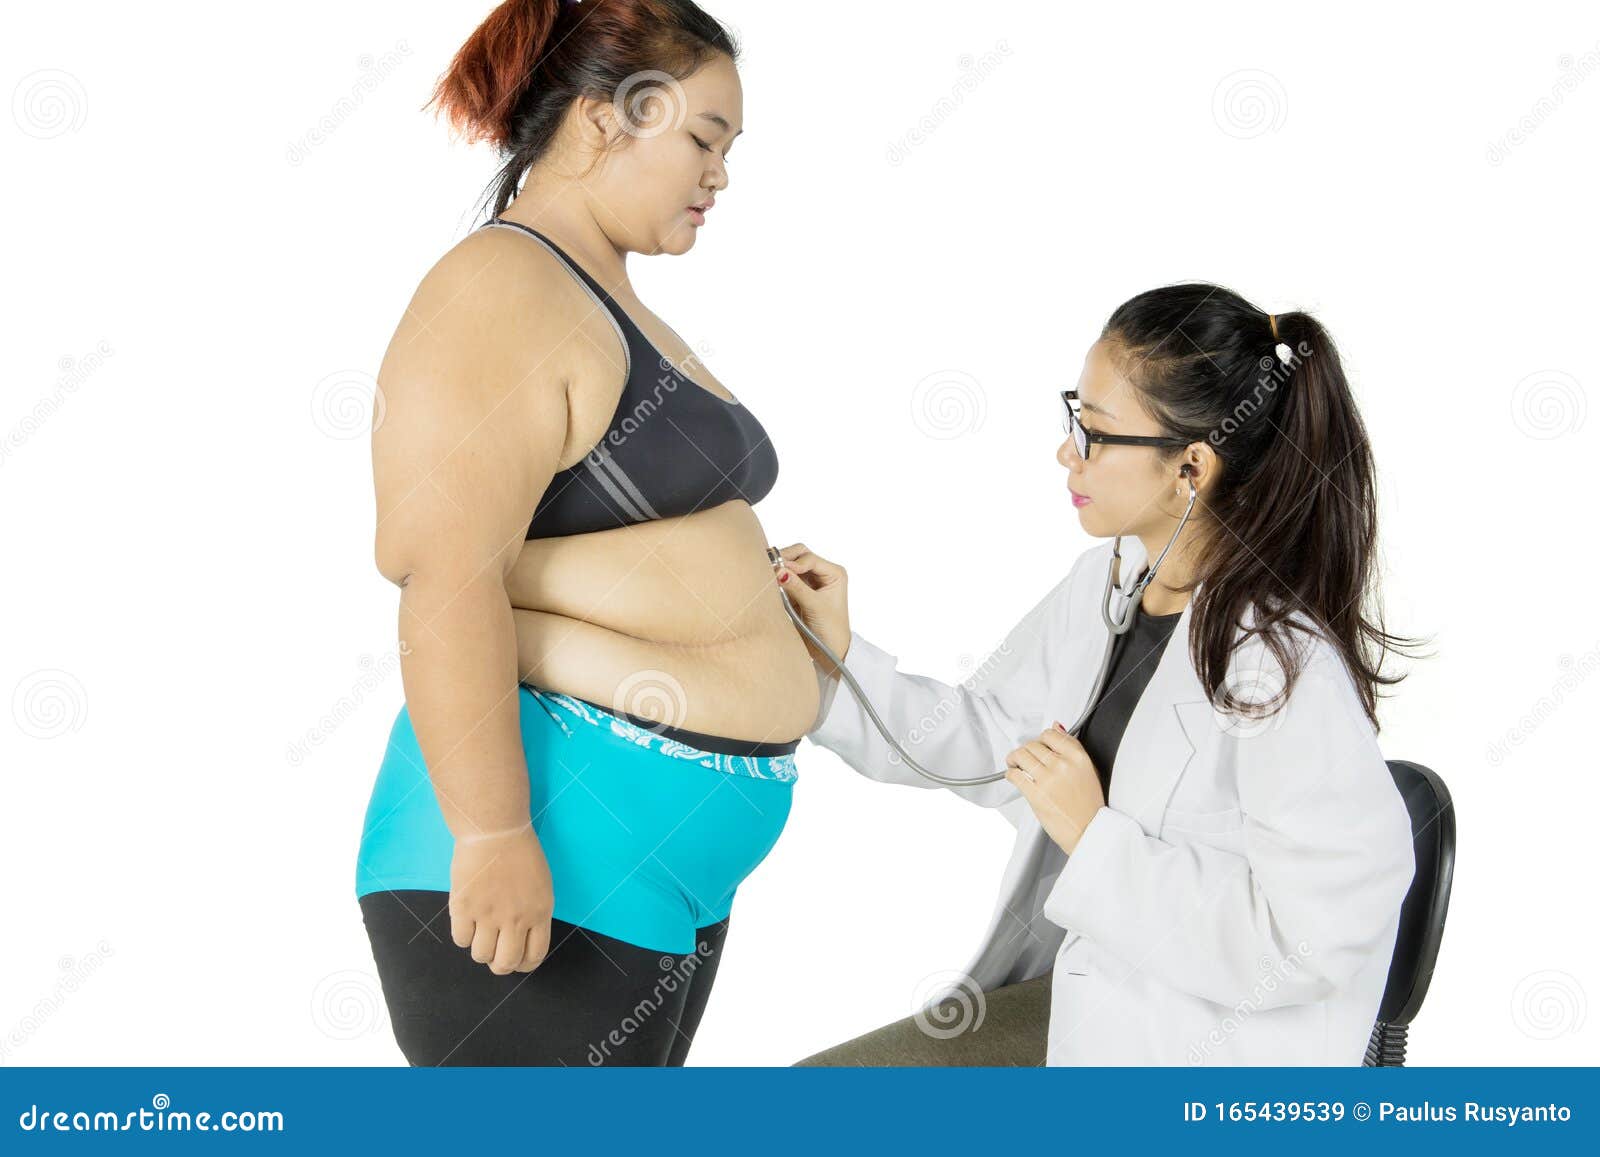 Fat Belly Girl